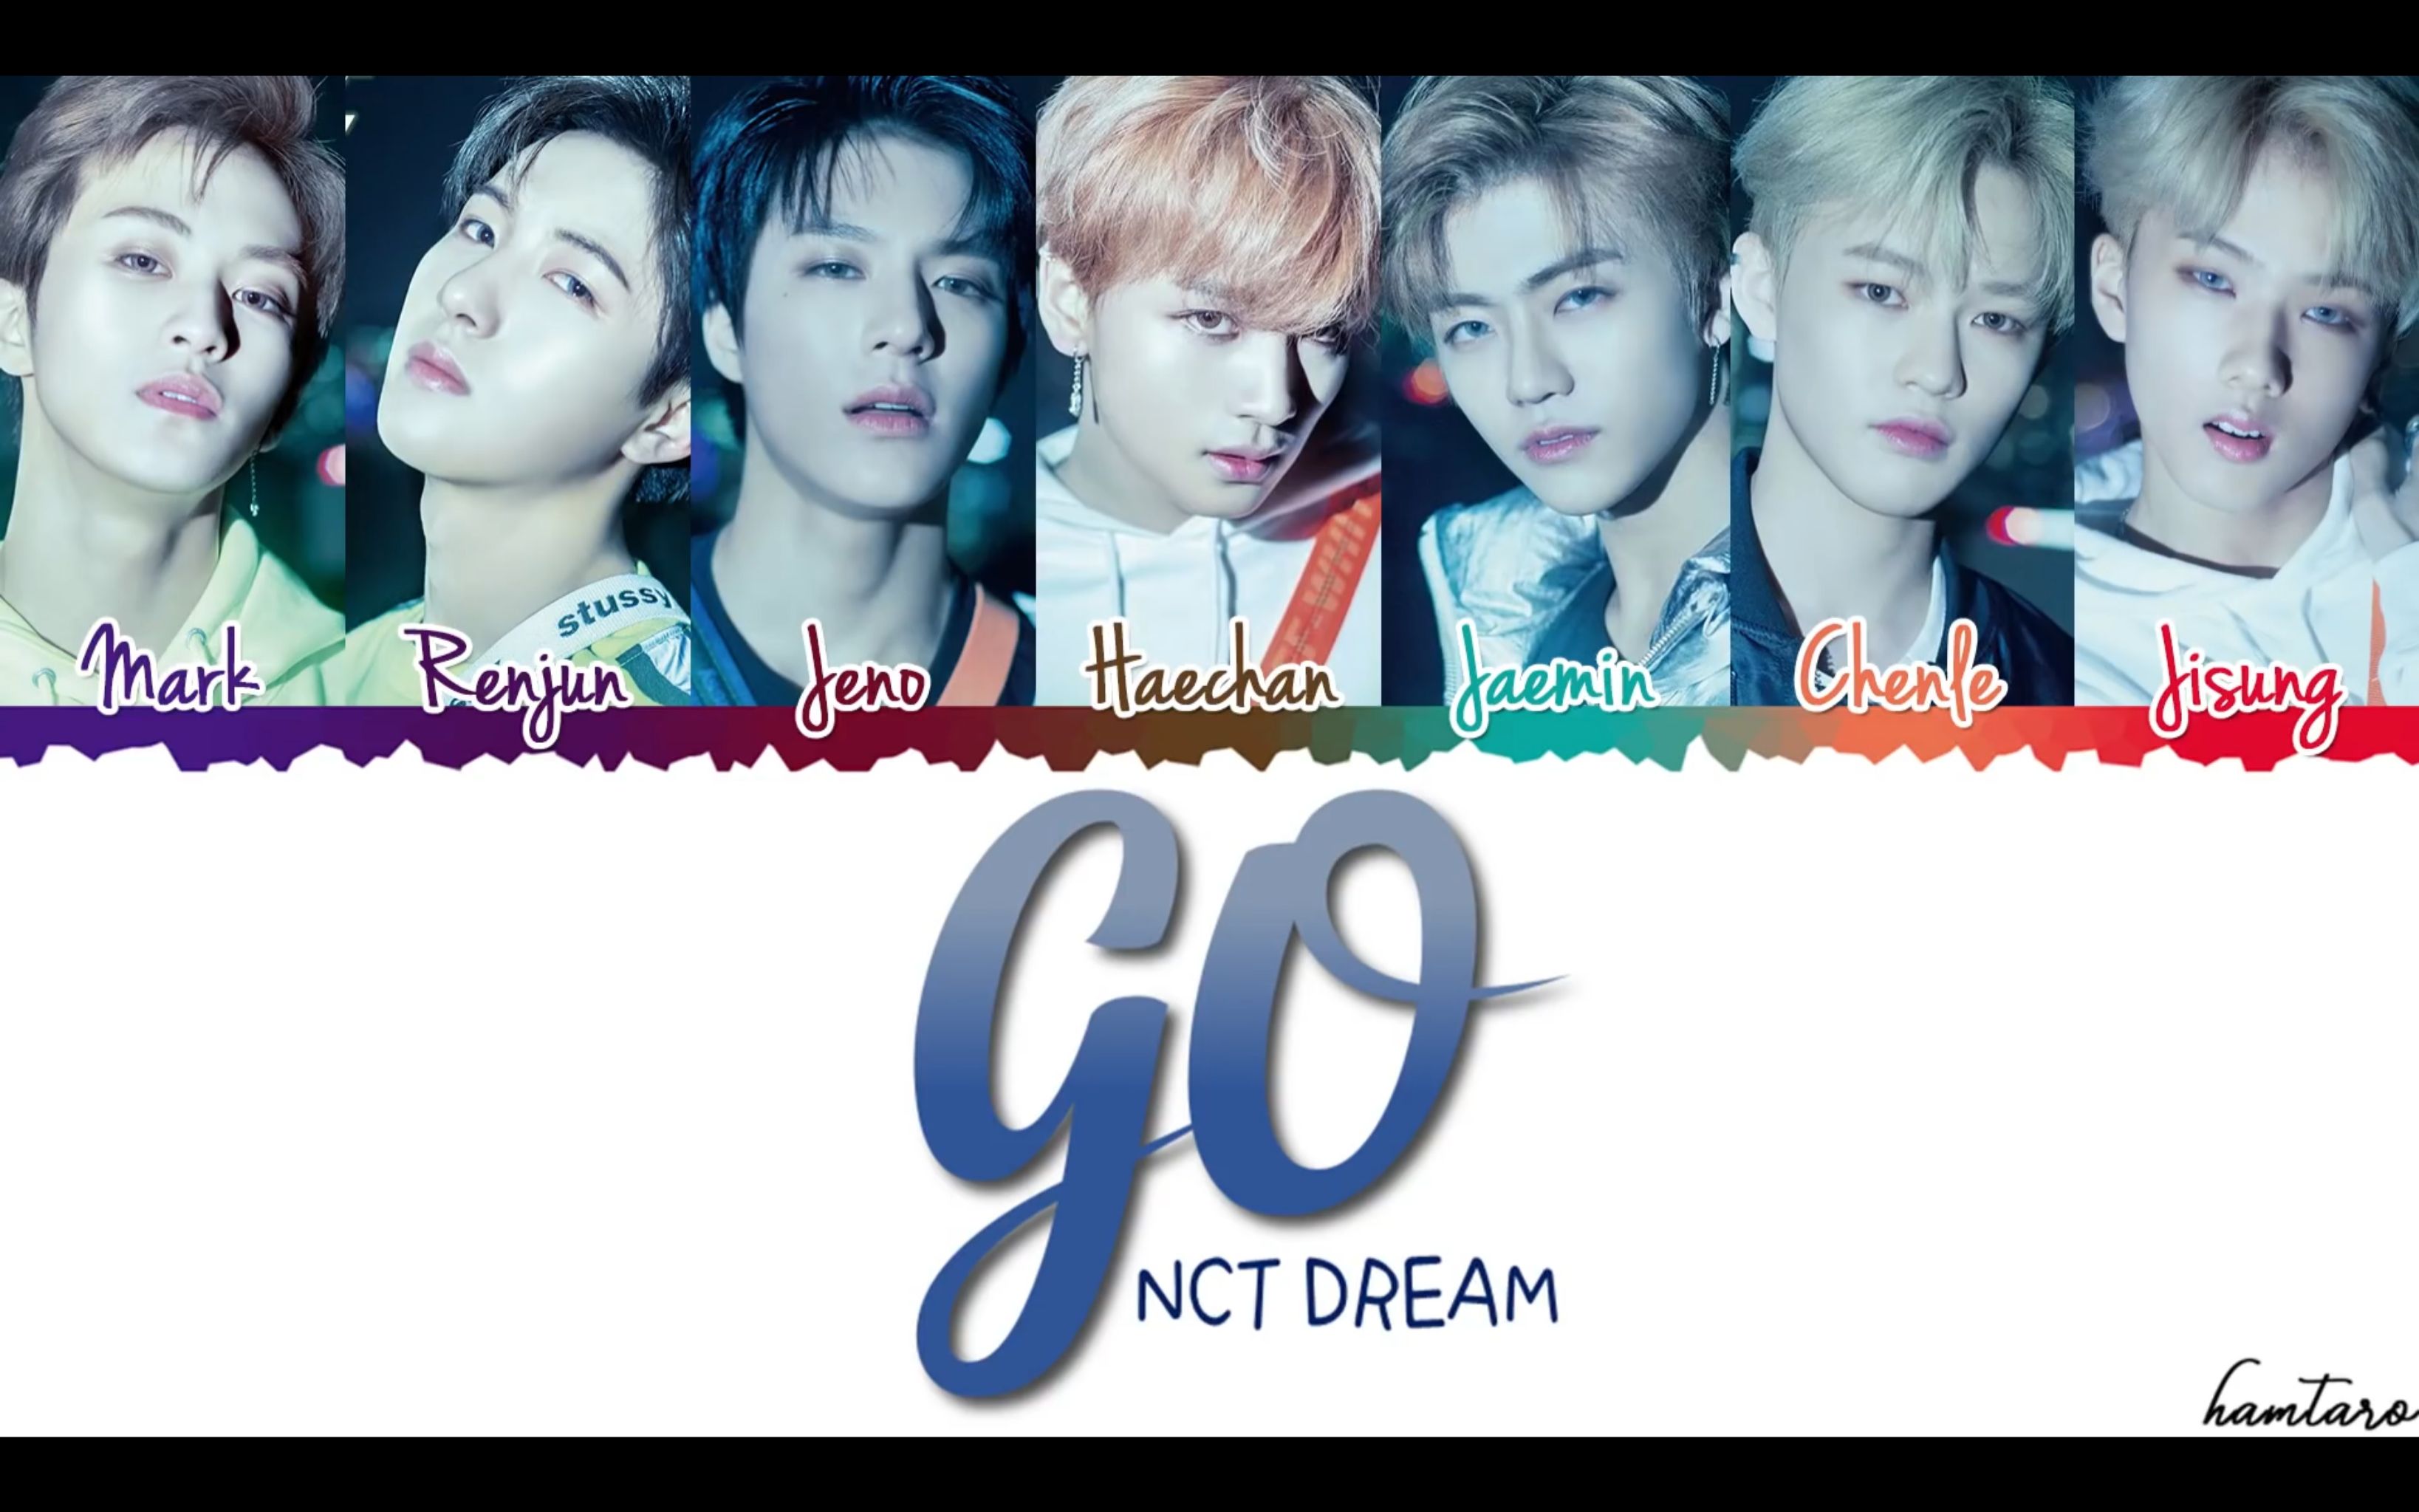 nct dream - "go" 歌词分配